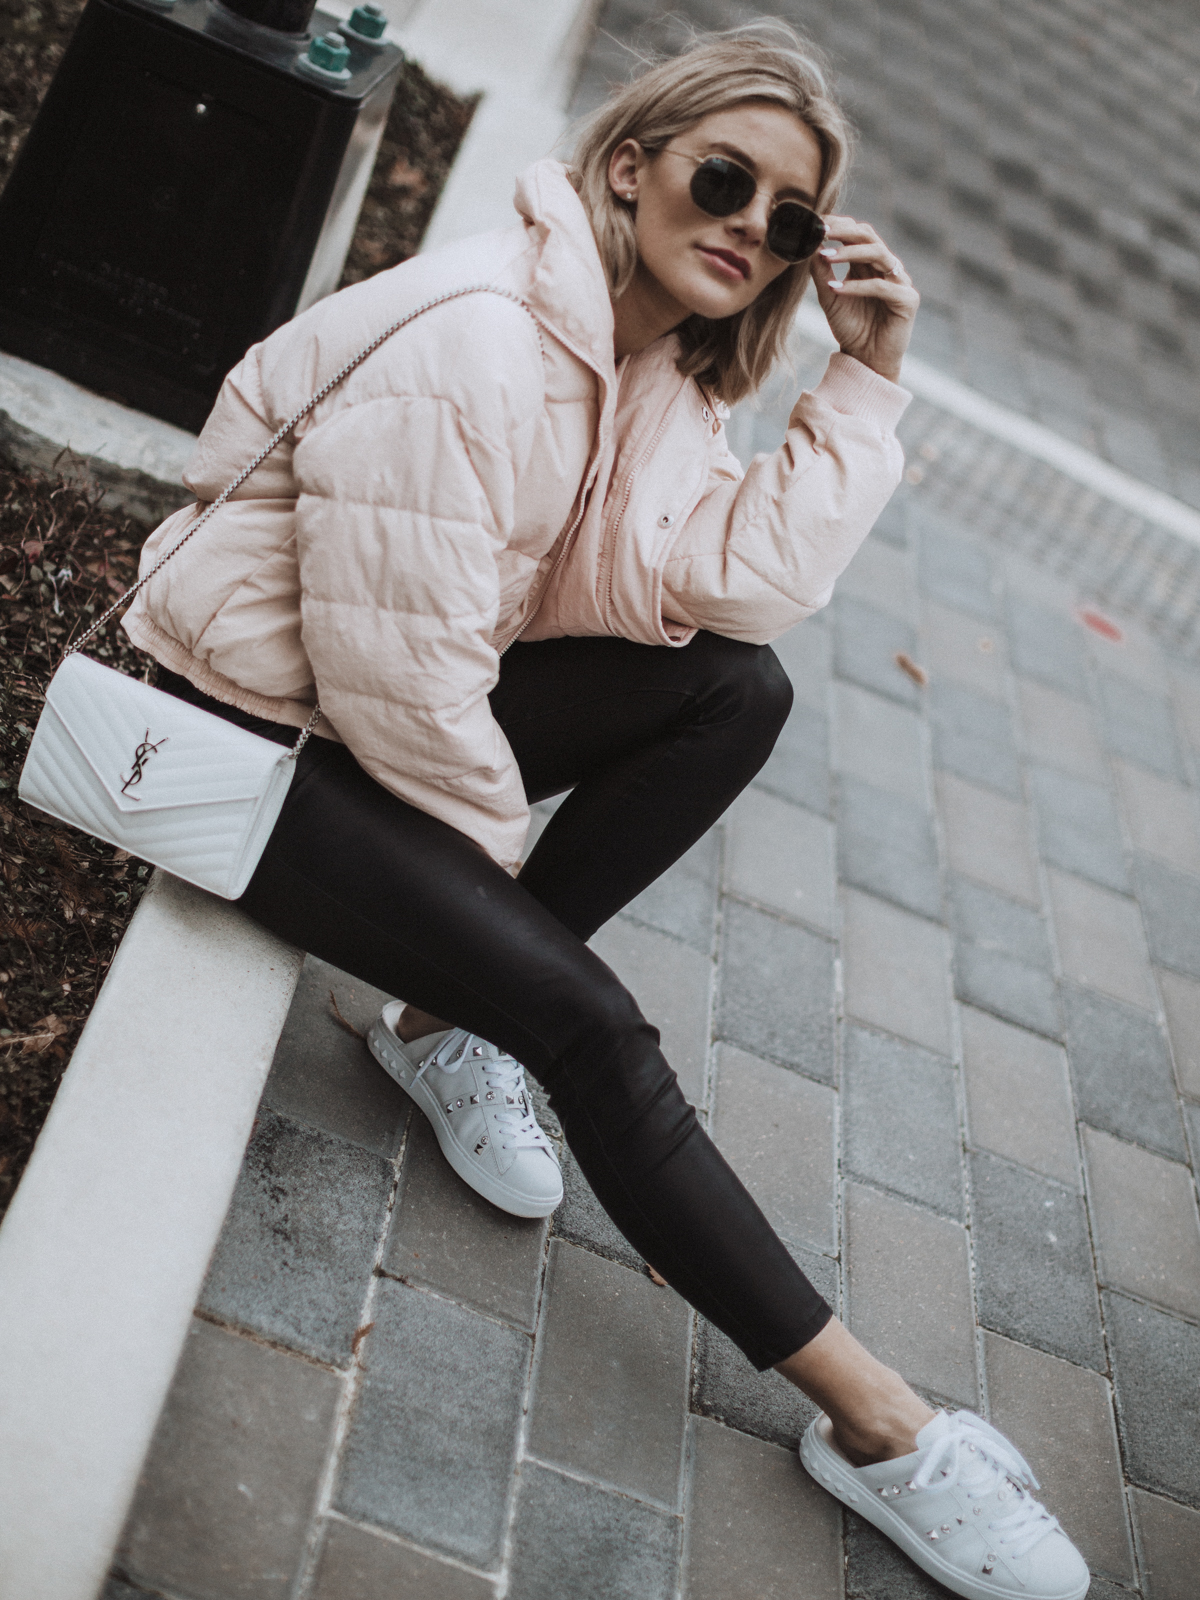 Sage Coralli in a blush pink puffer jacket